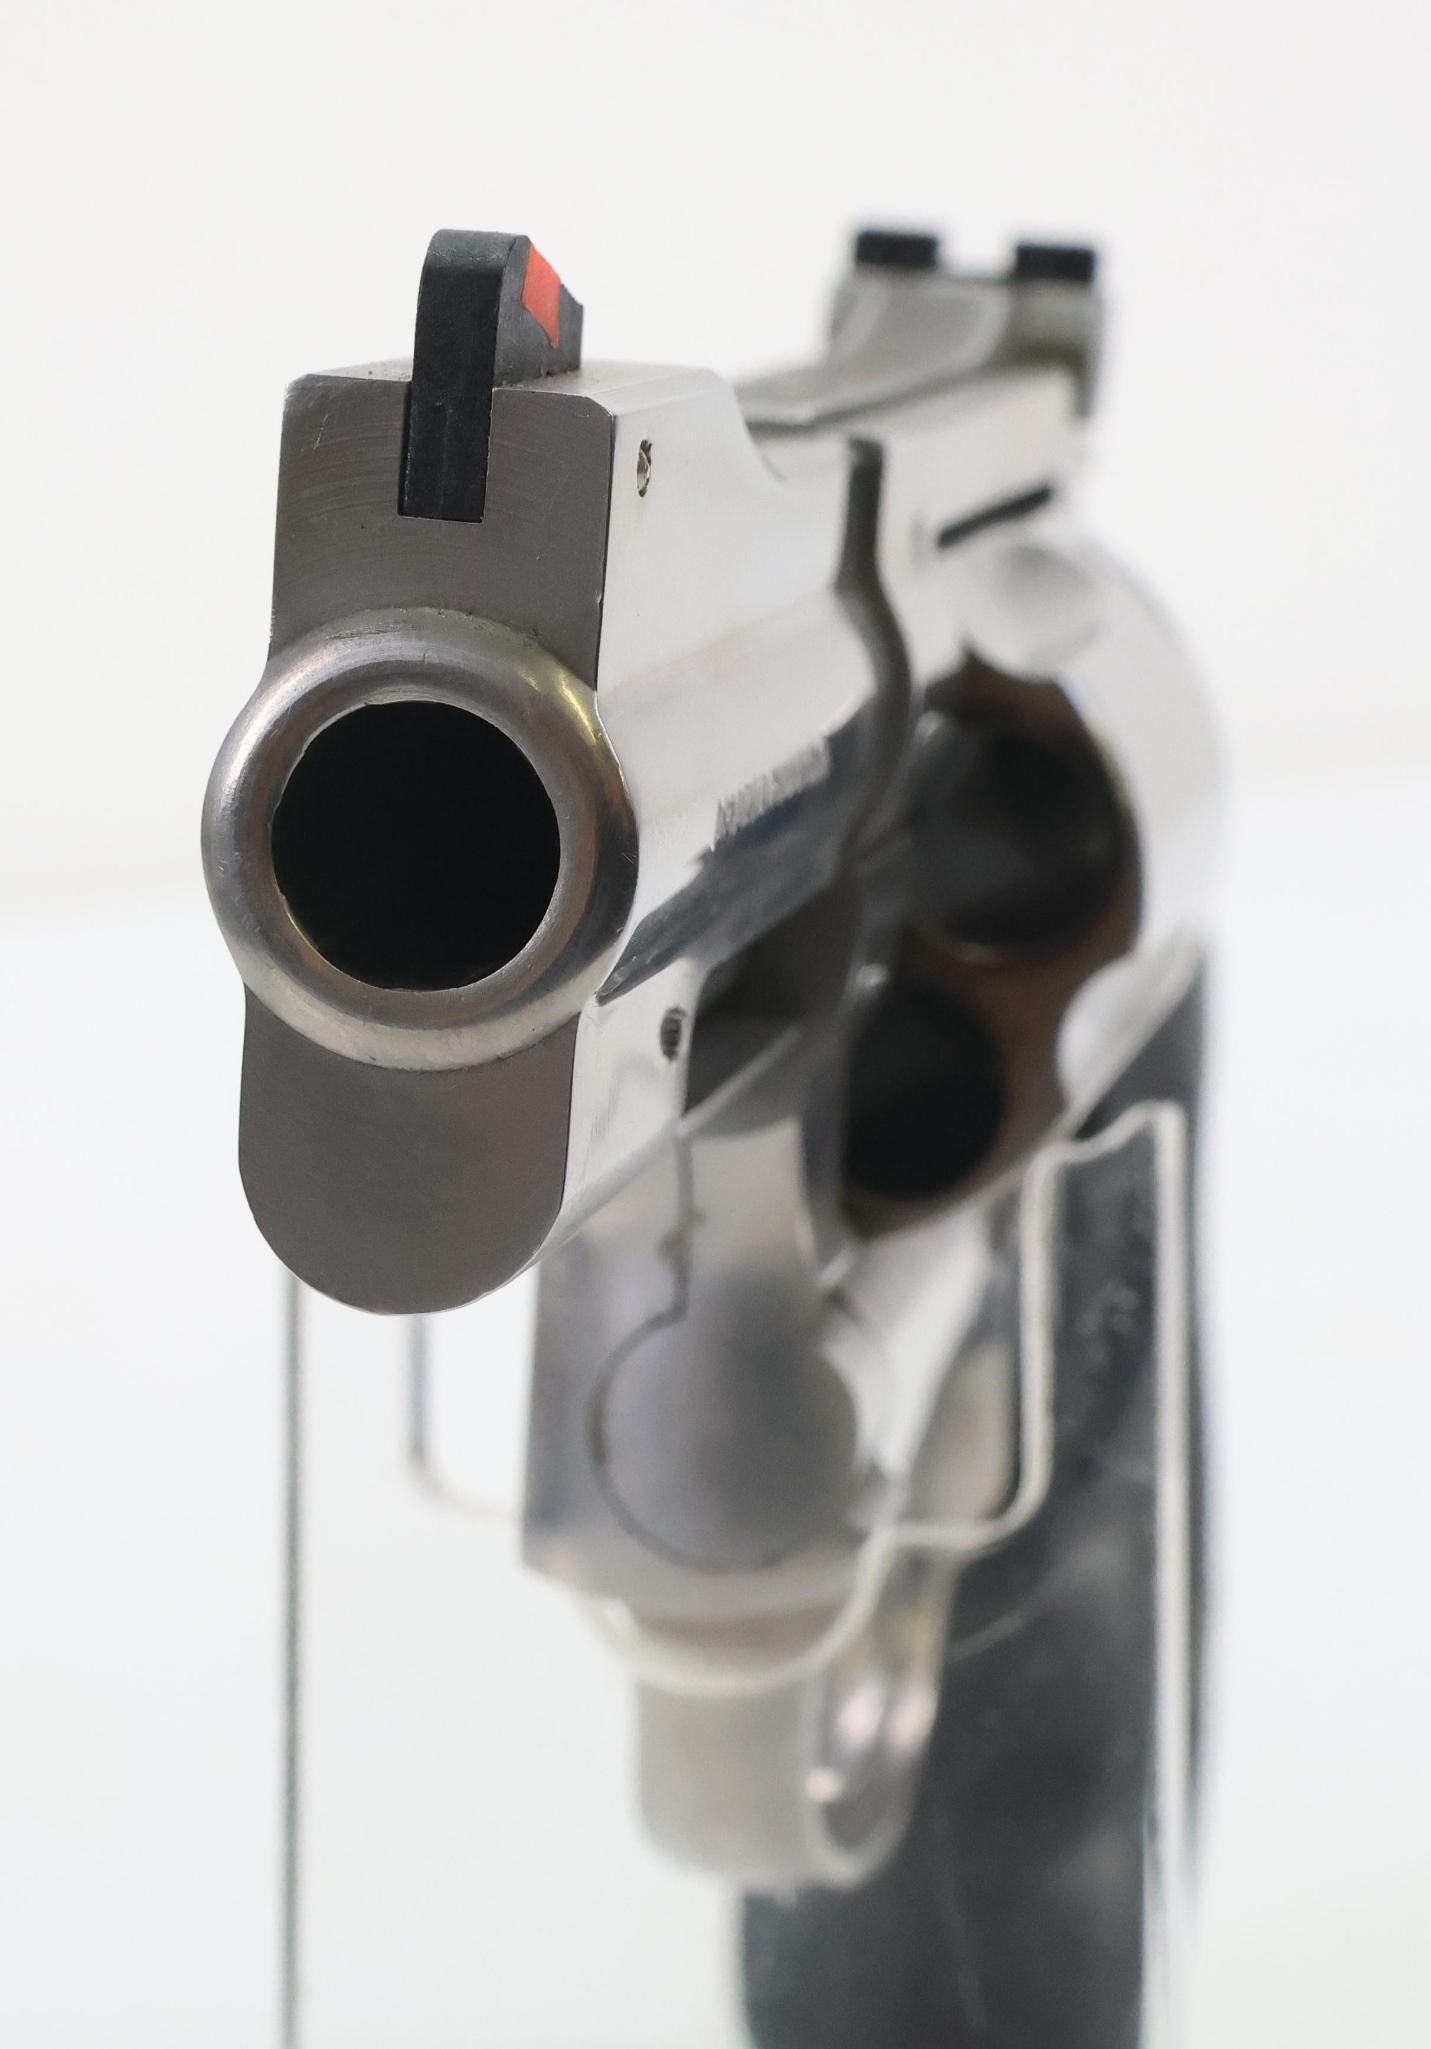 Rossi/Interarms M720 Double Action Revolver